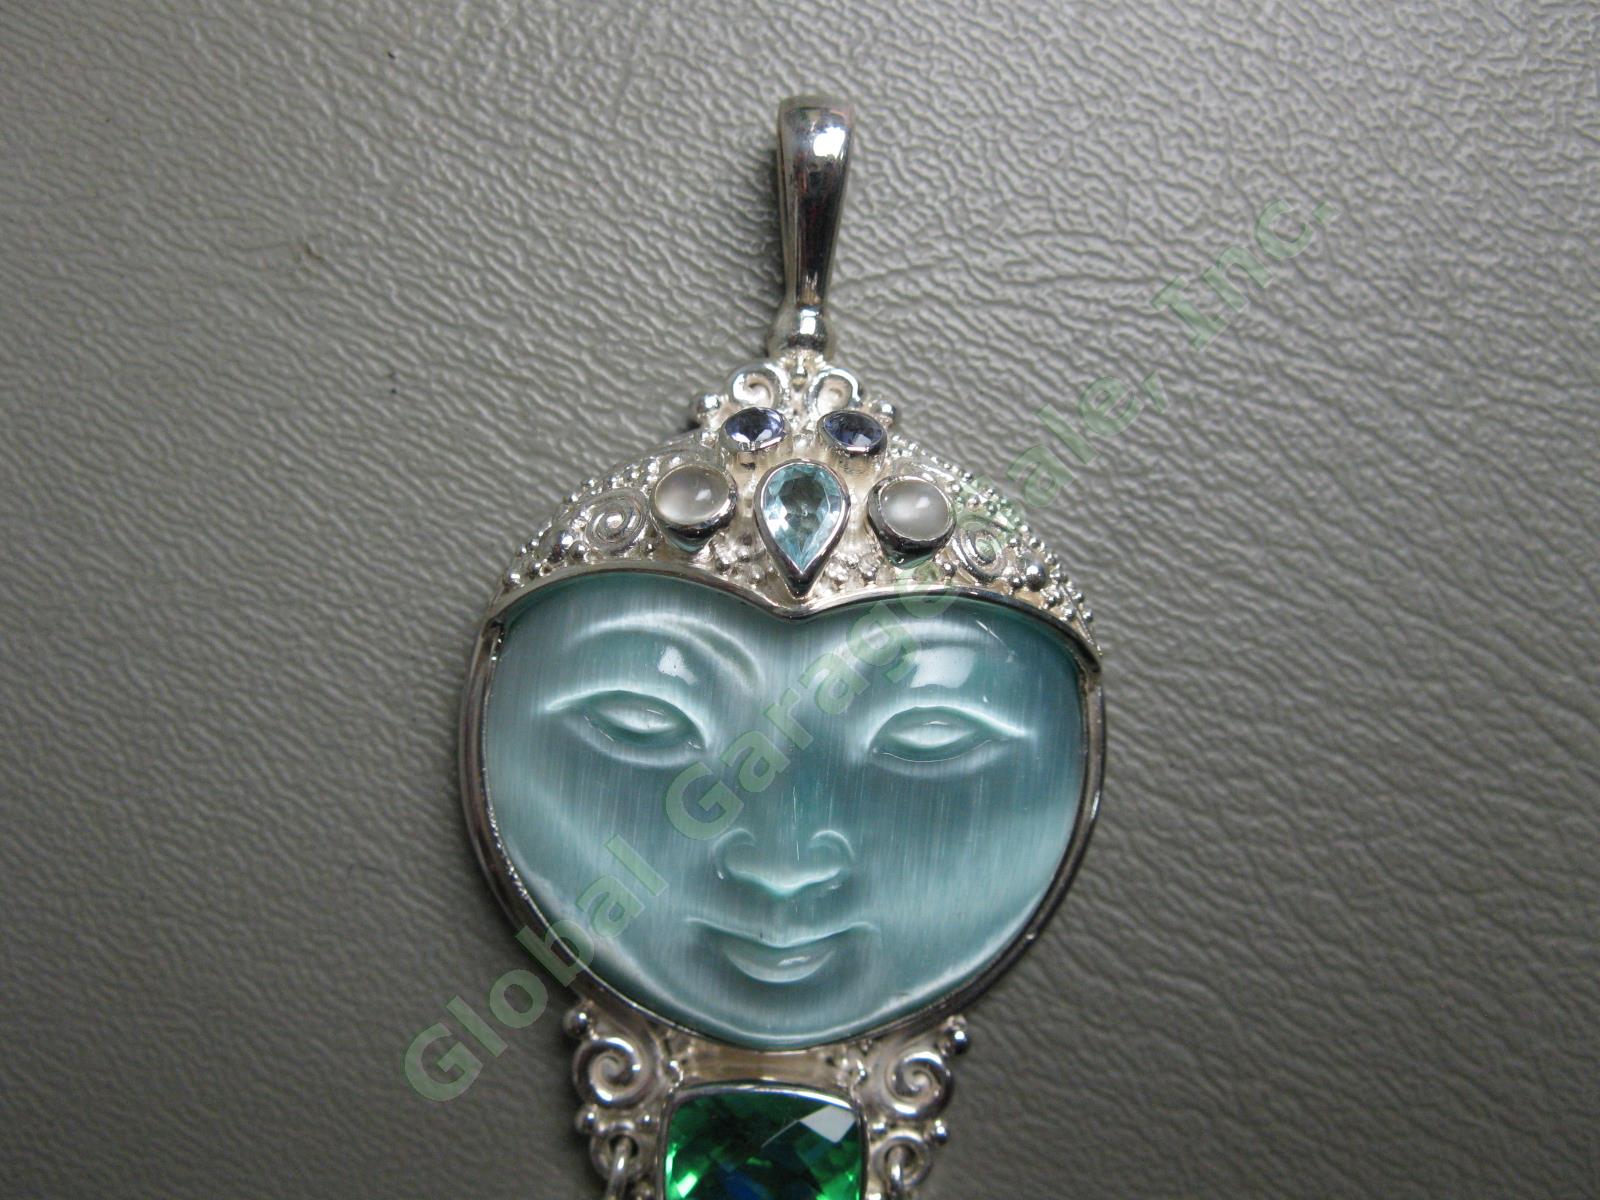 NEW Sajen Goddess Pendant Necklace Large Multi Gemstones Sterling Silver NO RES! 1